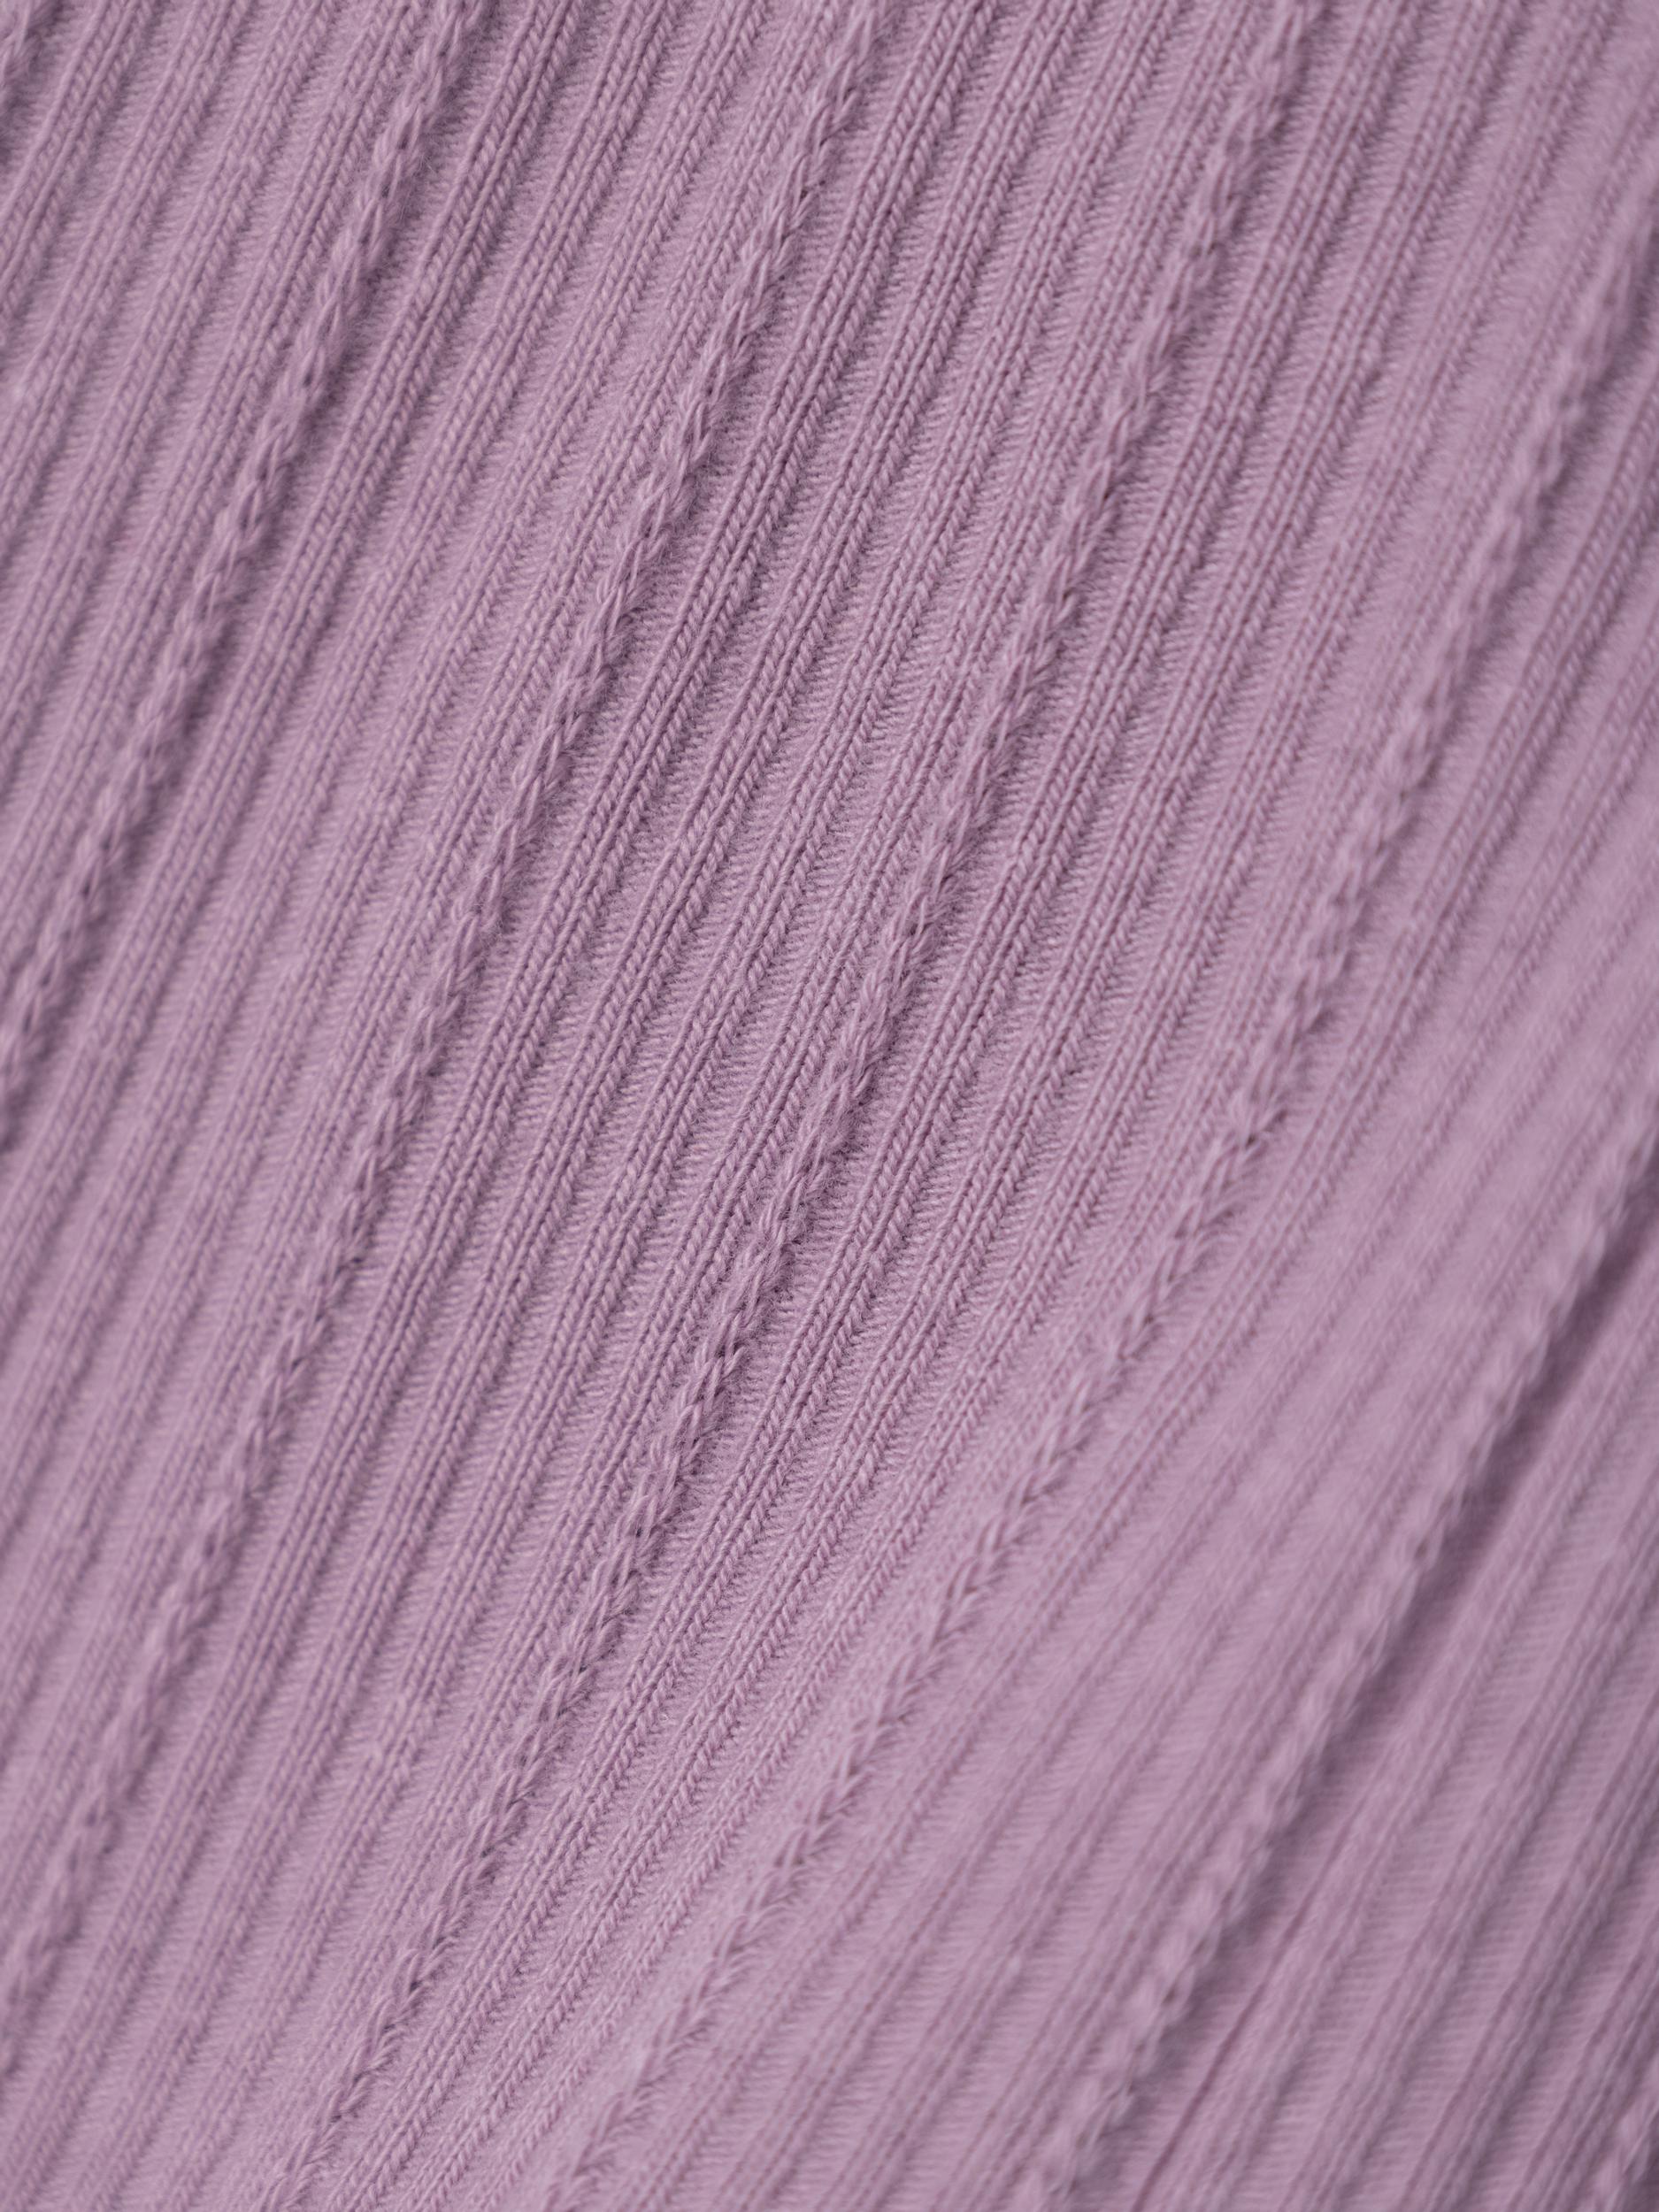 Girl's Ranie Legging-Lavender Mist-Close Up View